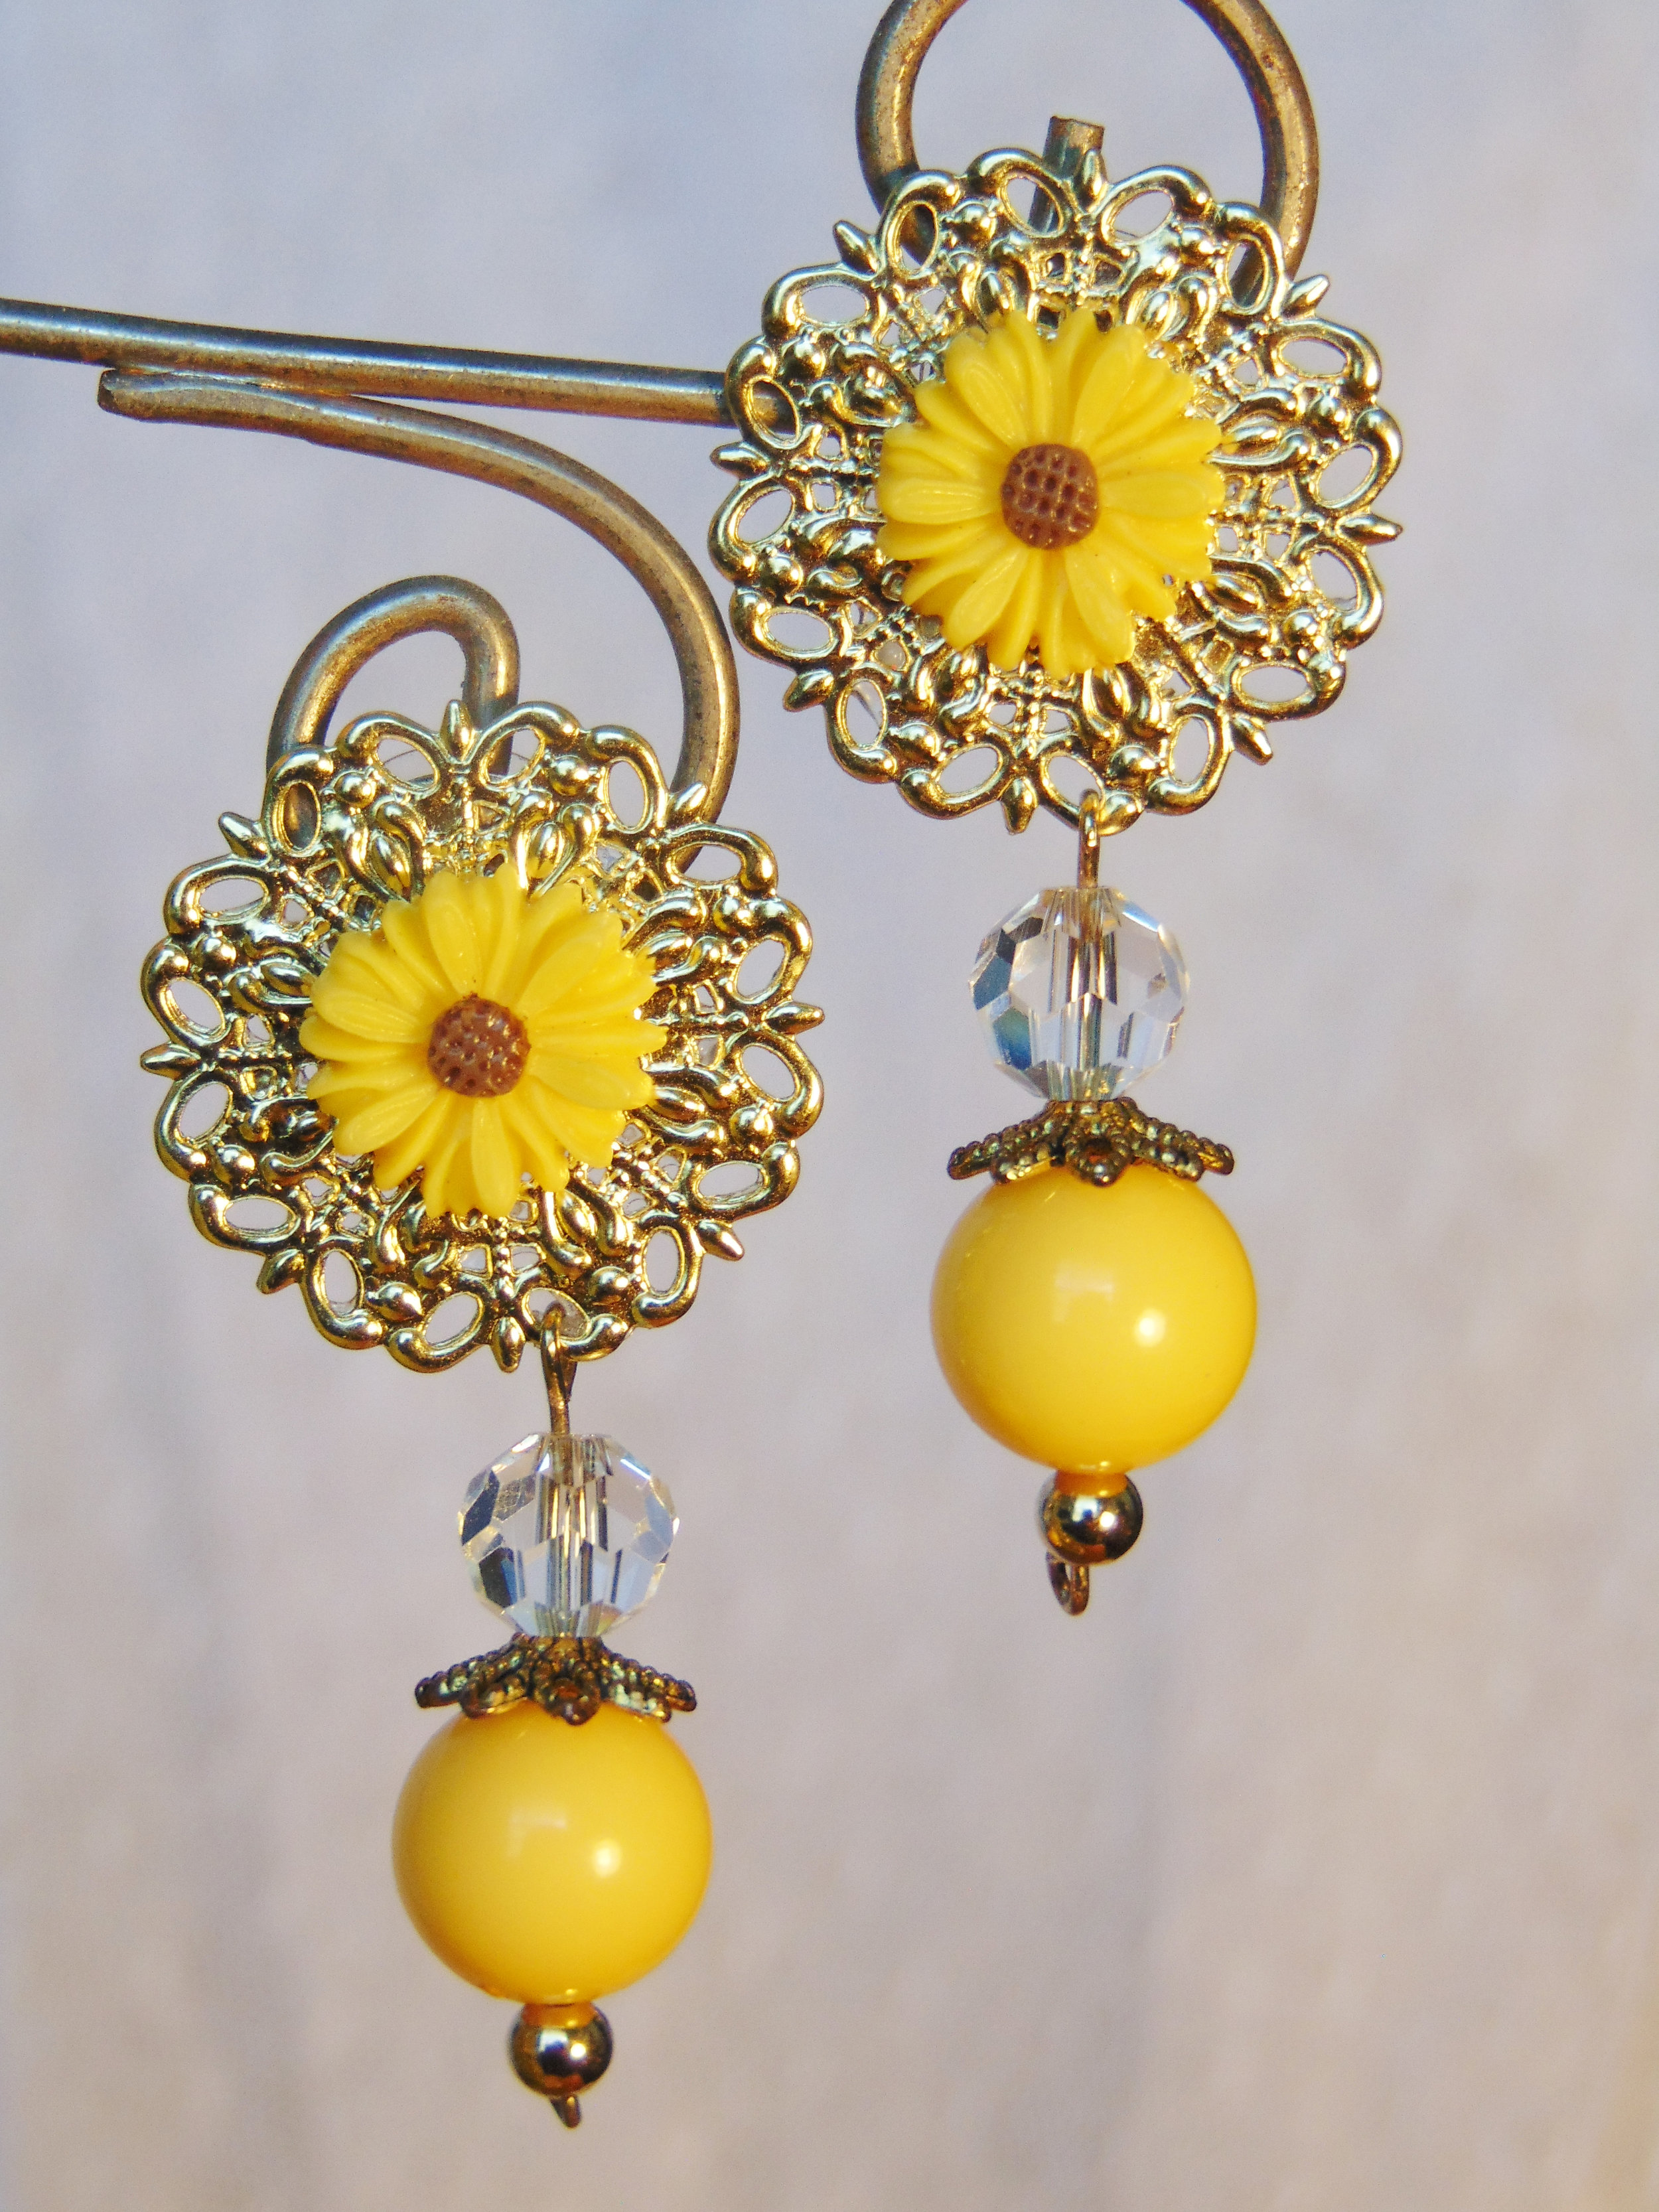 Handmade glass and bead earrings by JMB Designs